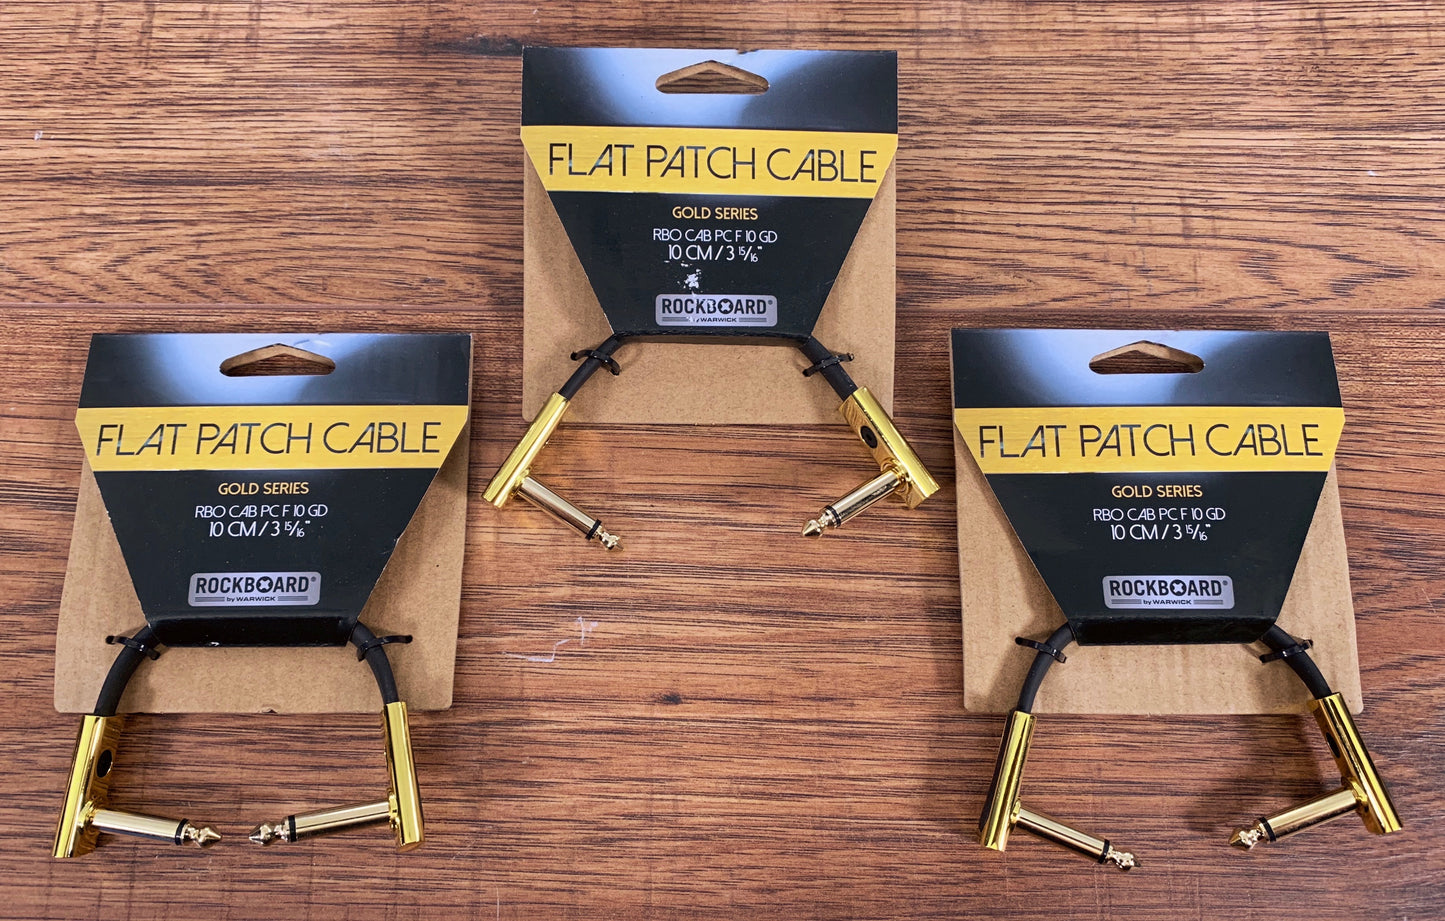 Warwick Rockboard Flat Patch Guitar Bass Pedalboard Cable 10 cm 3.49" Gold 3 Pack